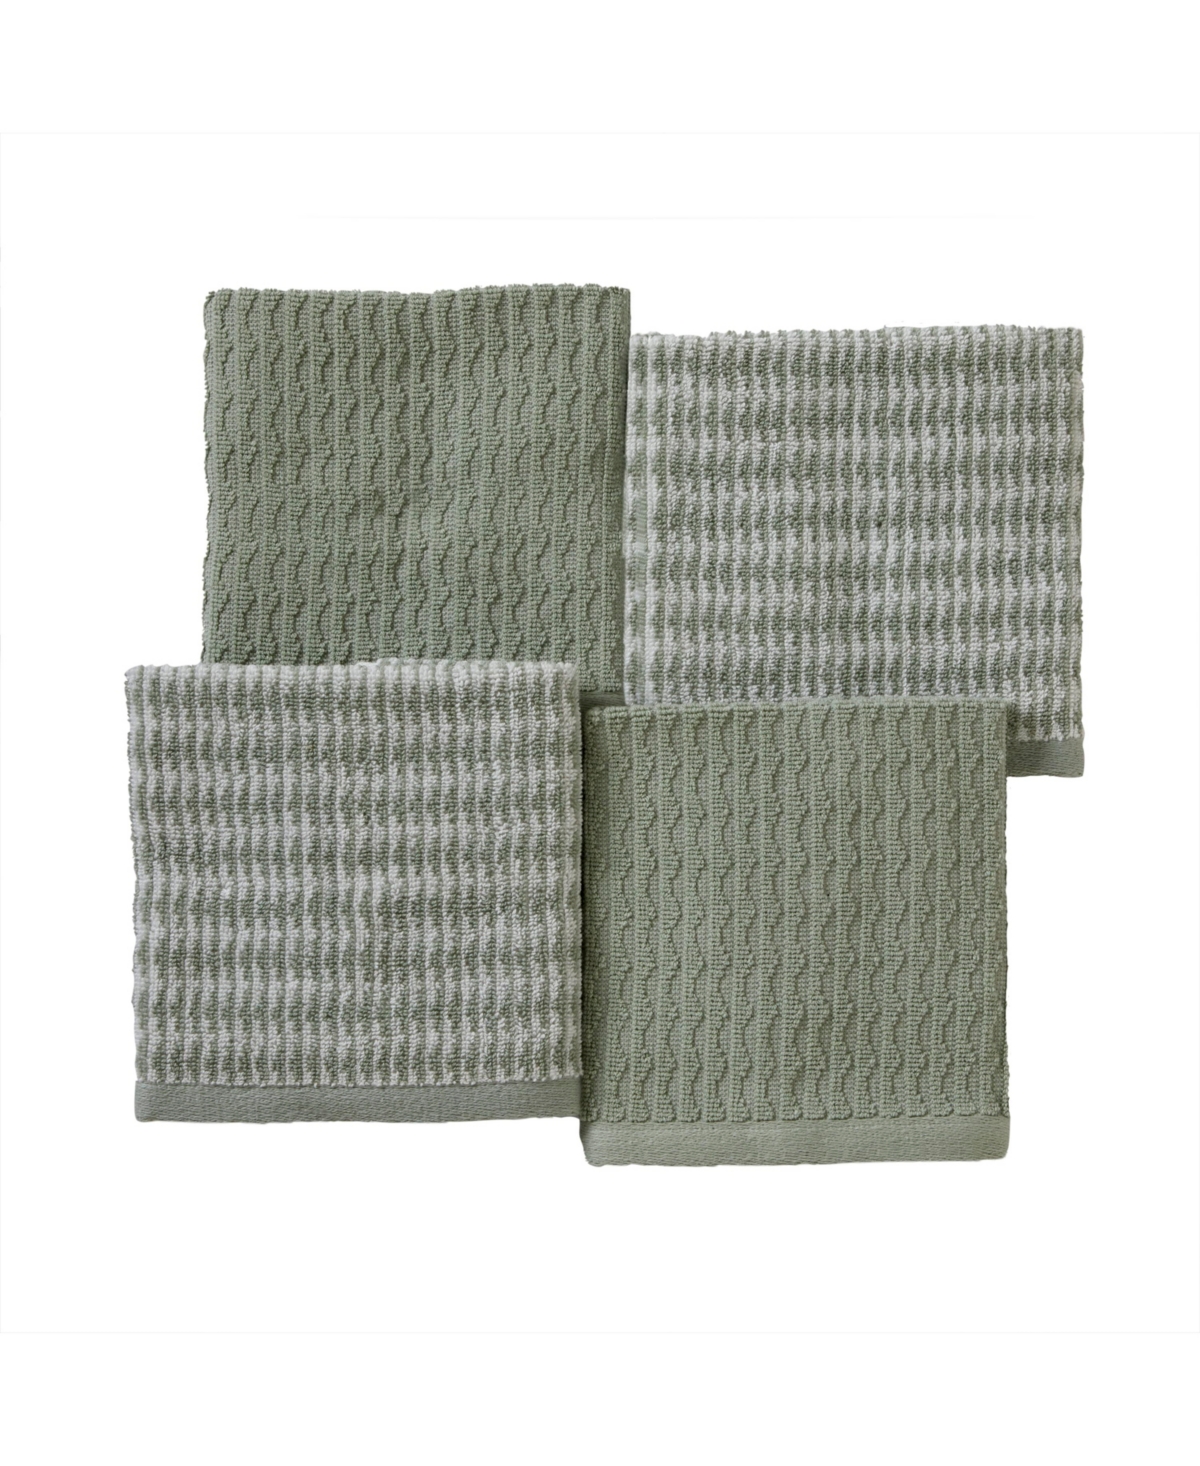 Skl Home Long Borough Turkish Cotton 4 Piece Washcloth Set, 12" X 12" In Sage